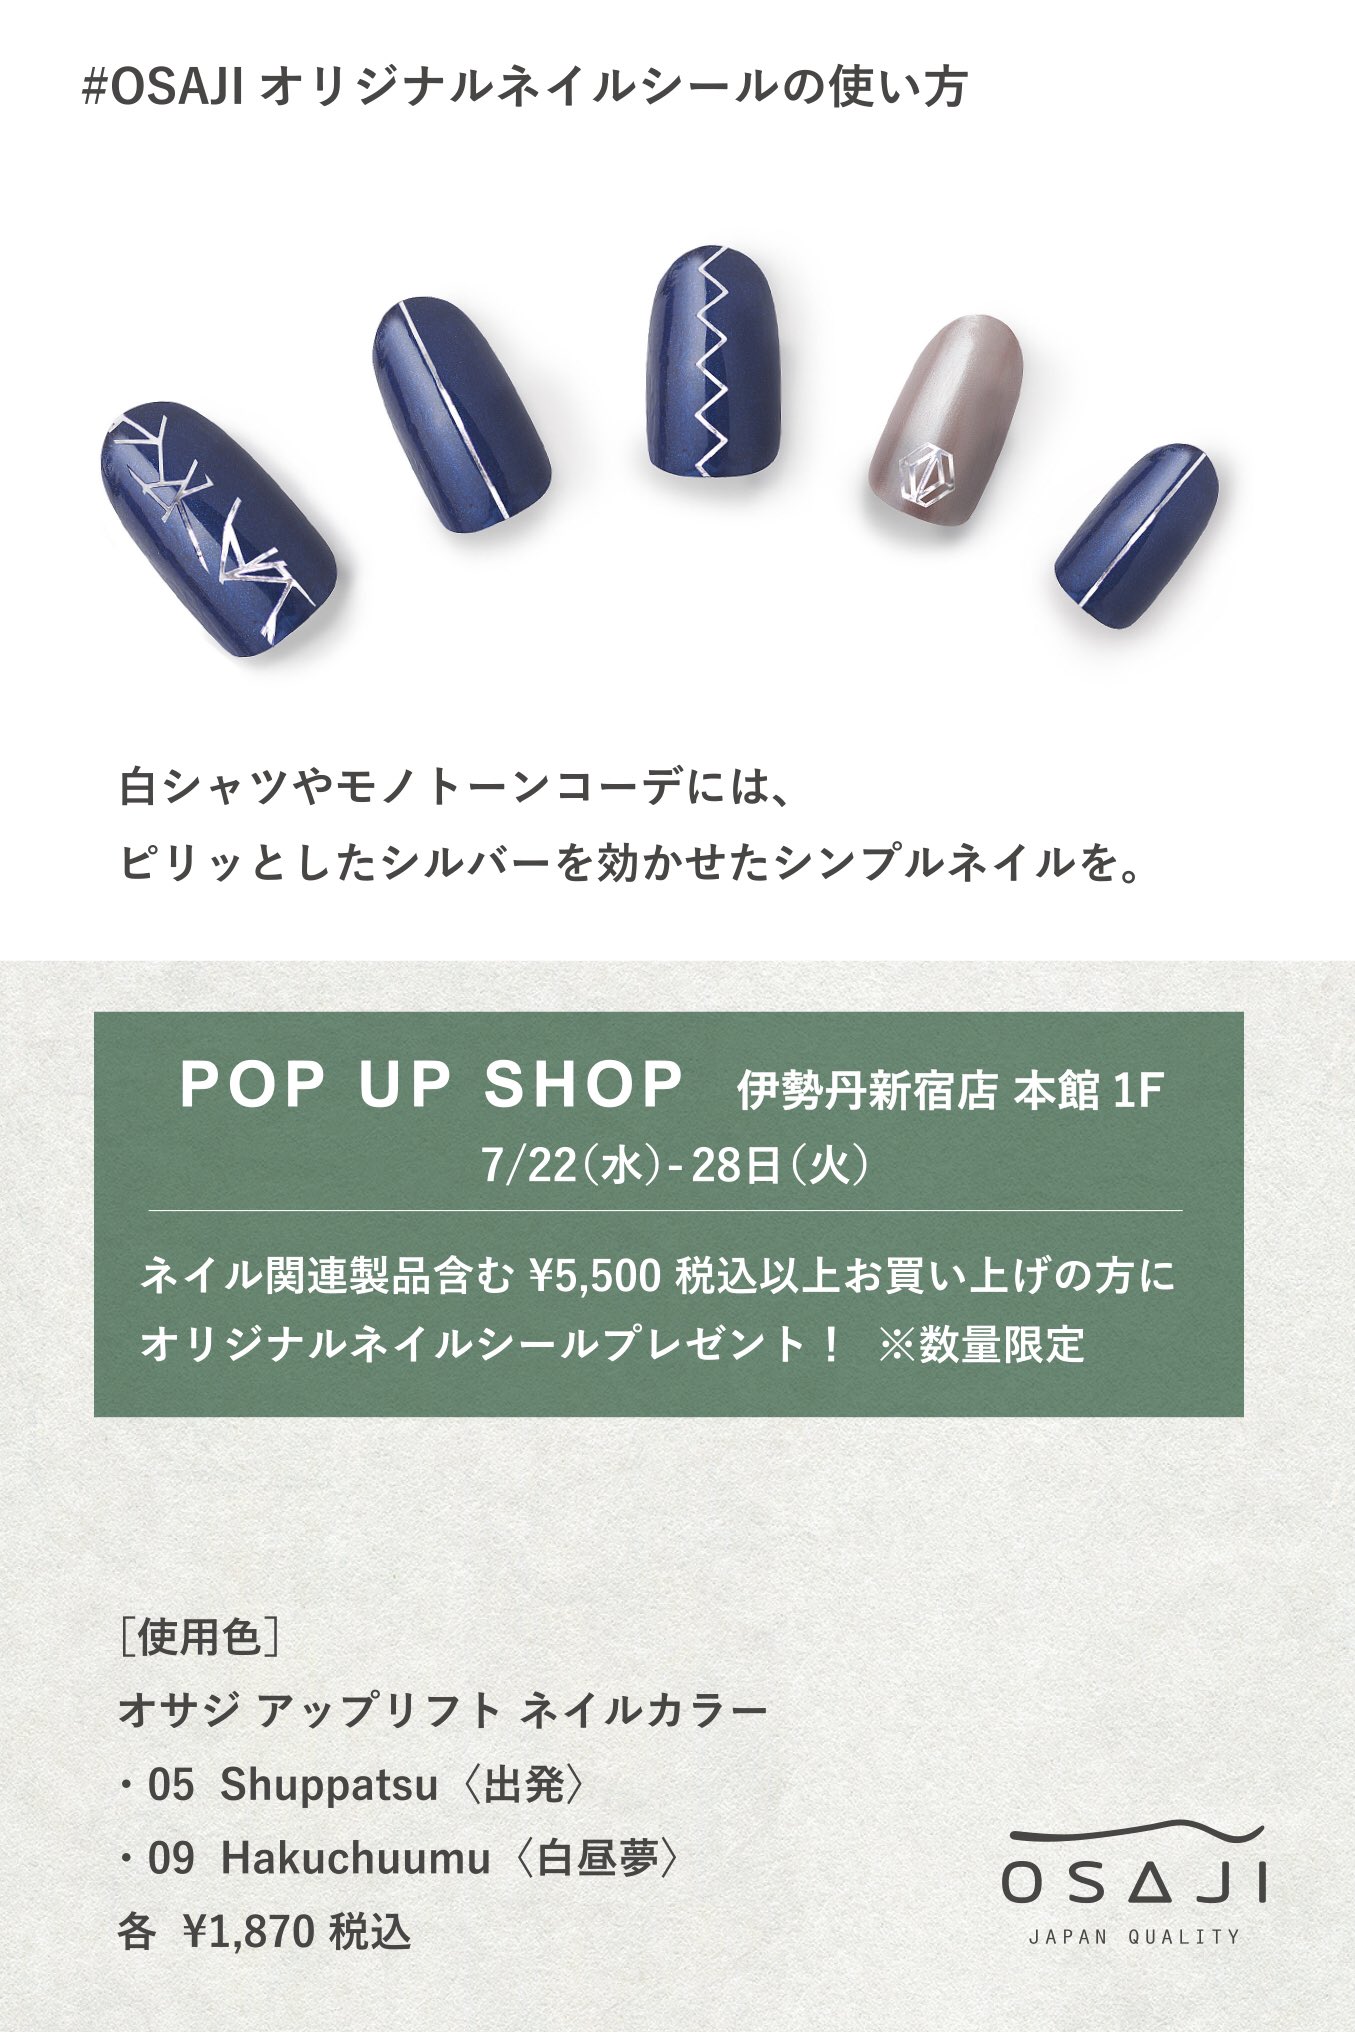 Osaji オサジ 28日まで伊勢丹新宿店のpop Up Shopでは 購入特典としてネイル のラベルをモチーフにしたオリジナルネイルシールをご用意しております 数量限定 T Co 0vfweotiwi